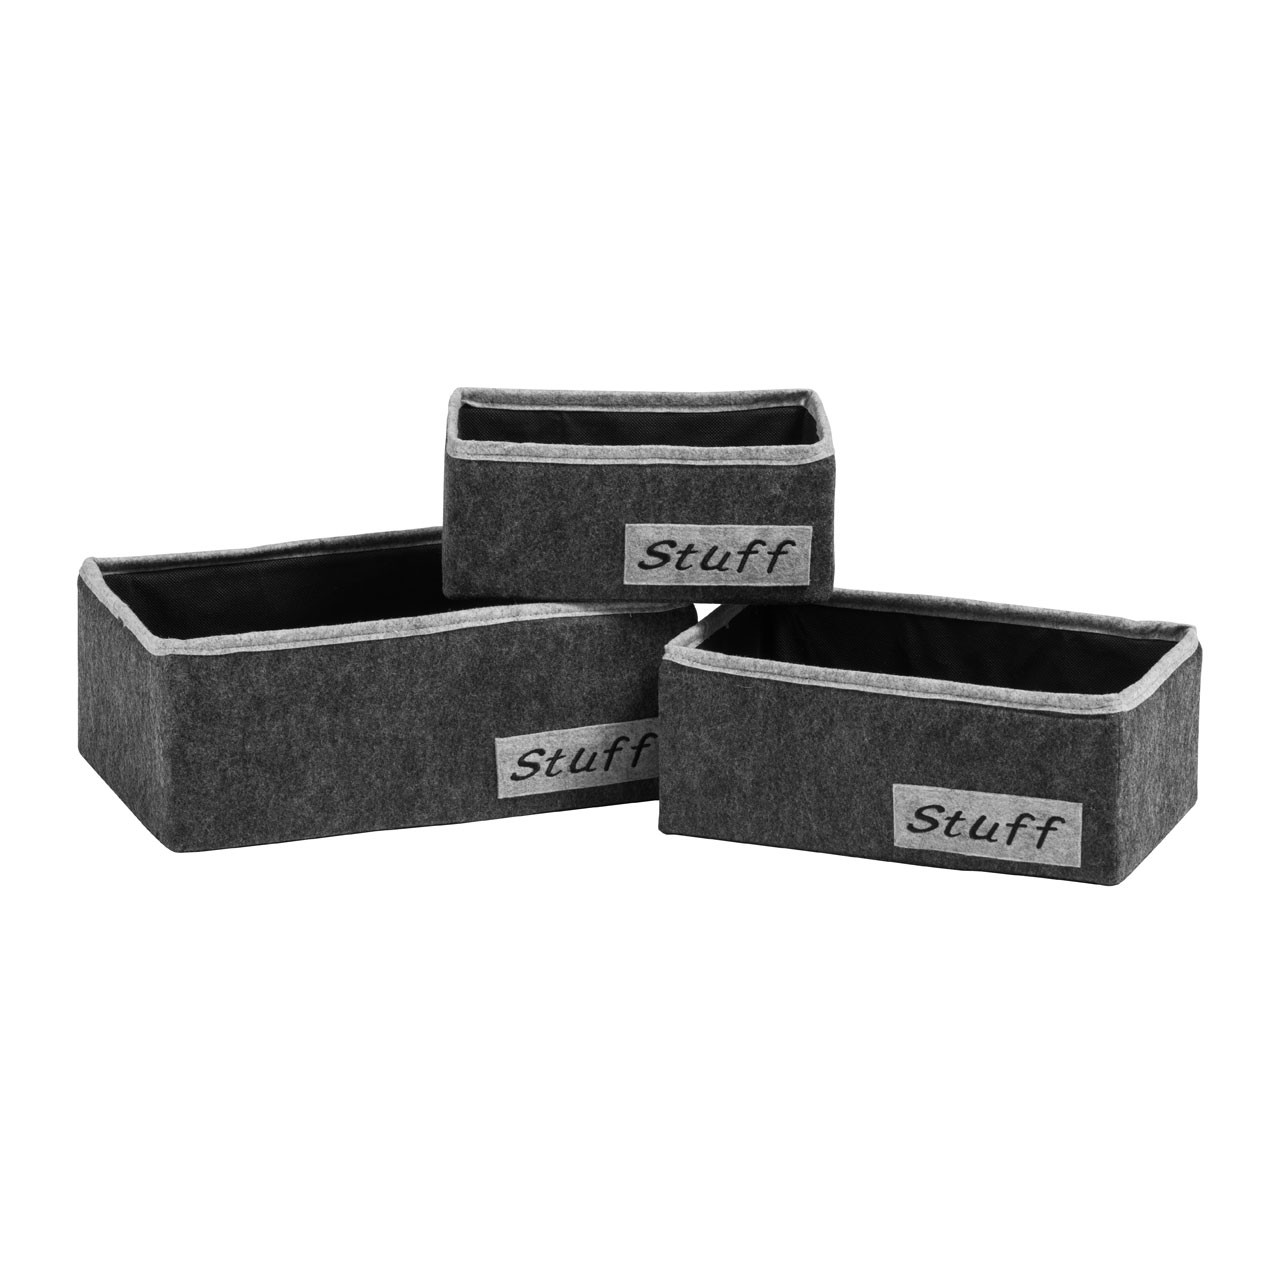 Prime Furnishing Stuff Storage Boxes, Dark/Light Grey - Set Of 3